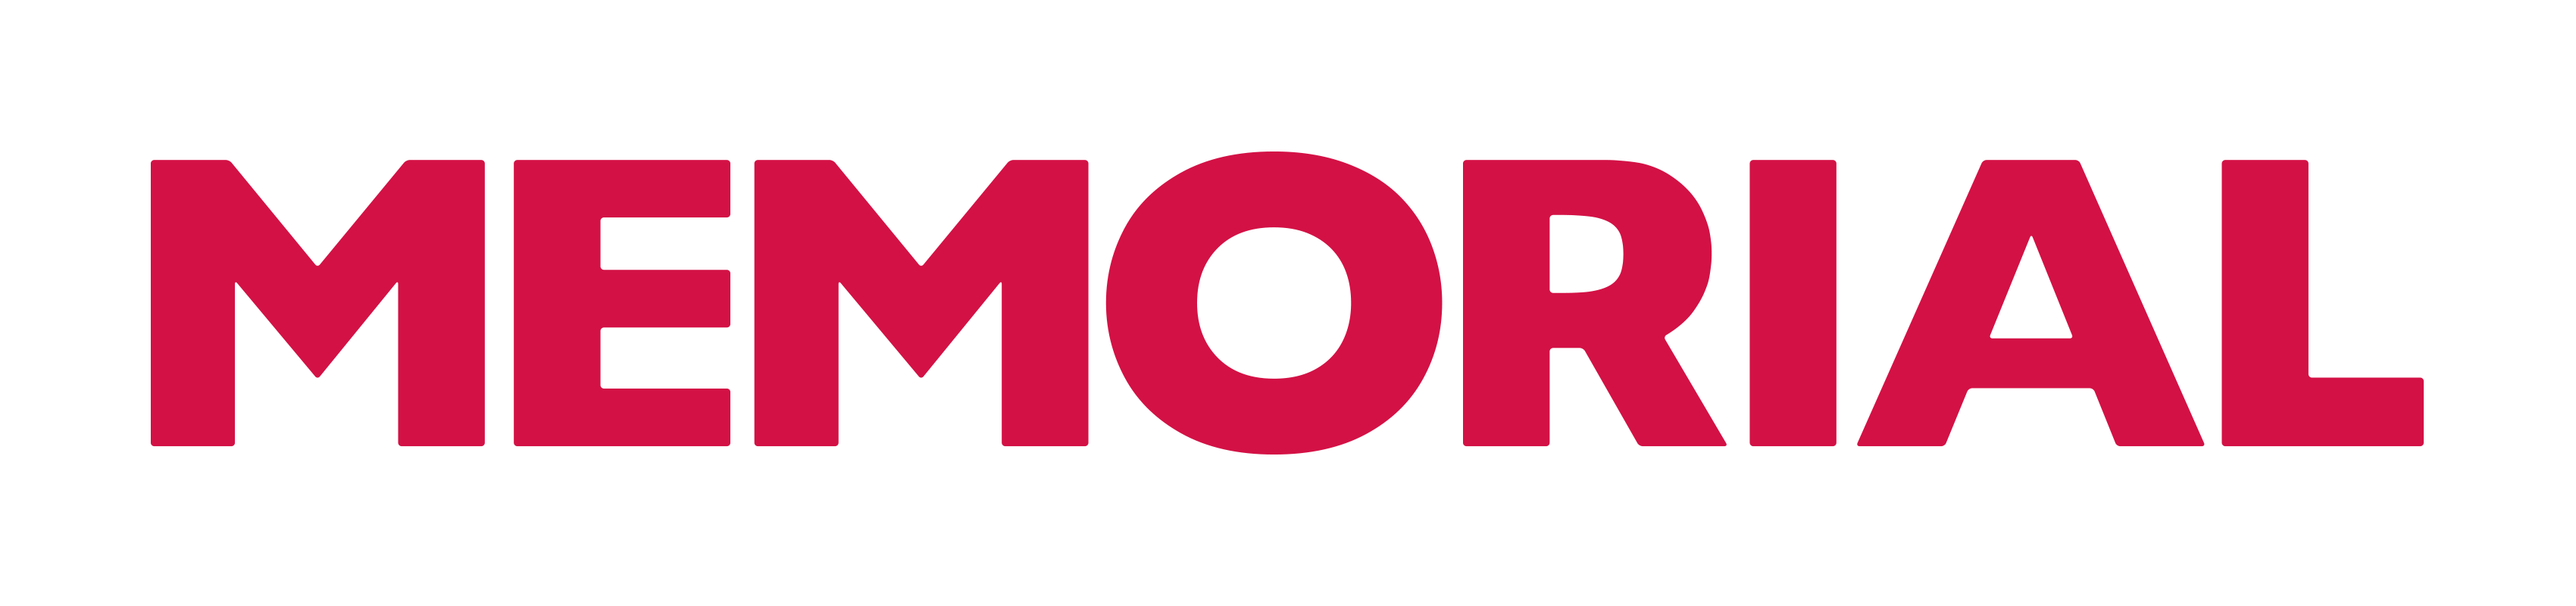 Memorial Logo - Memorial Logo Vector Online 2019